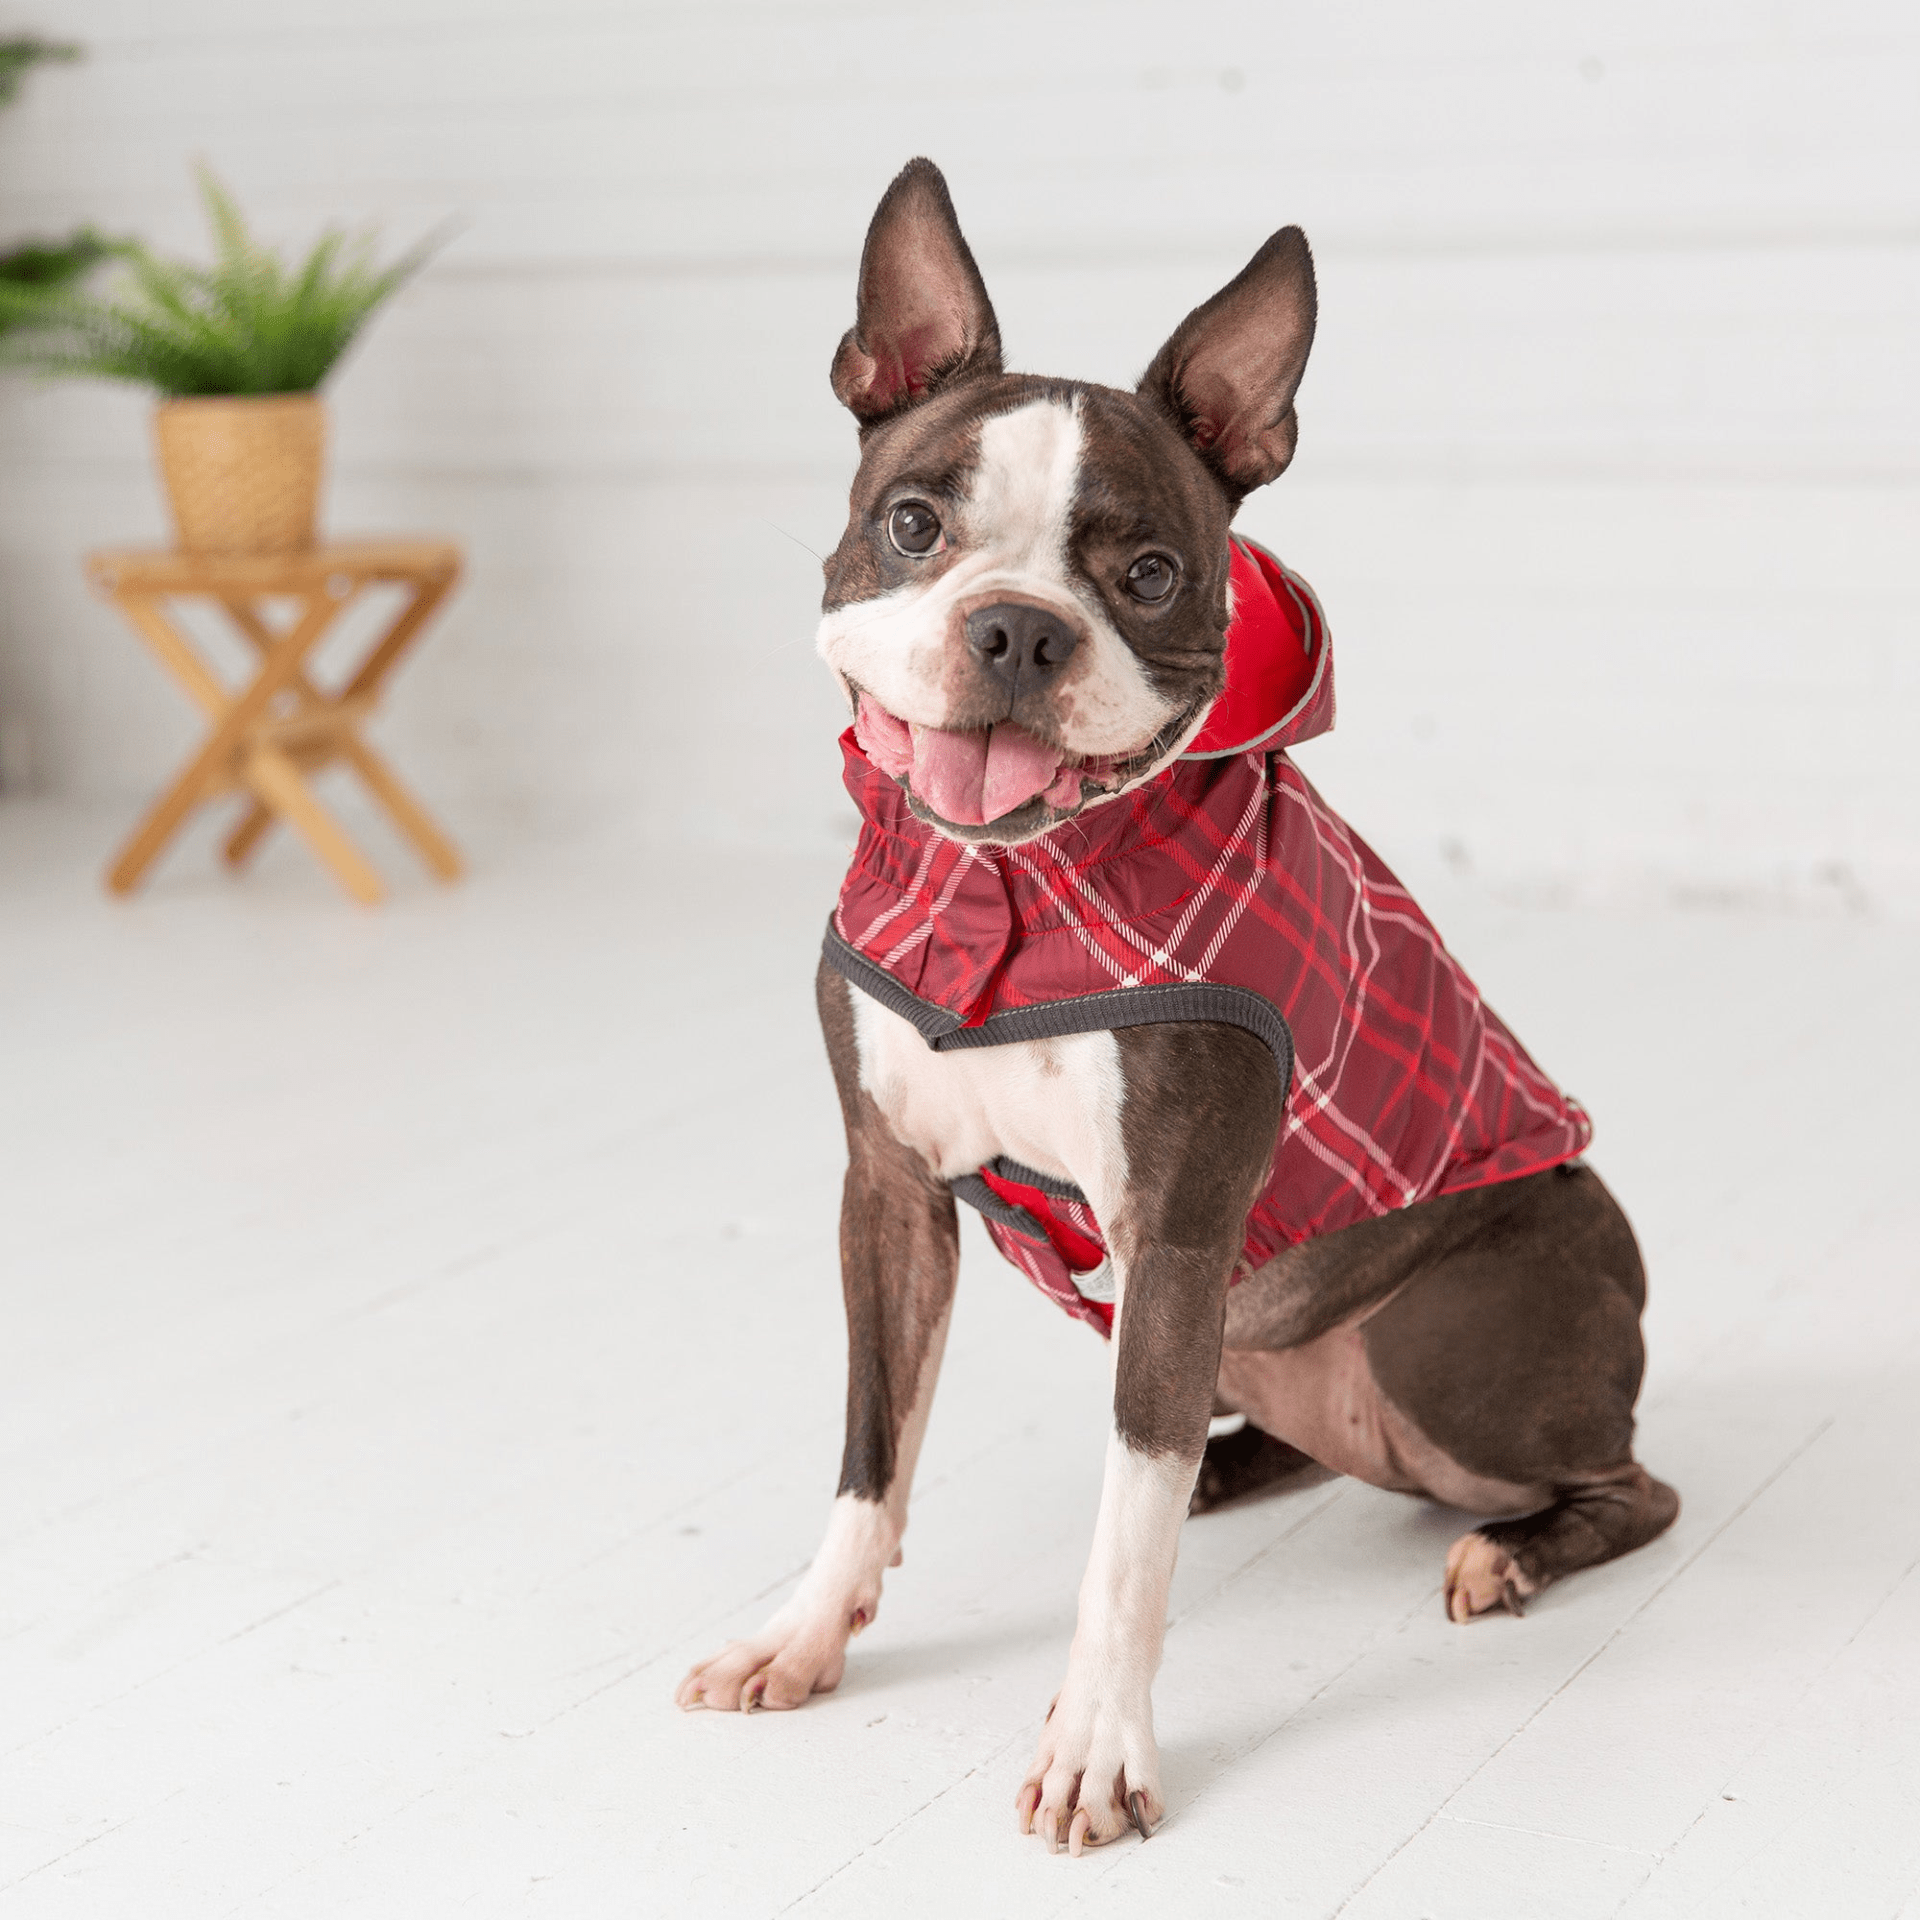 Dog and Pet Stuff Reversible Elasto-Fit Raincoat - Red